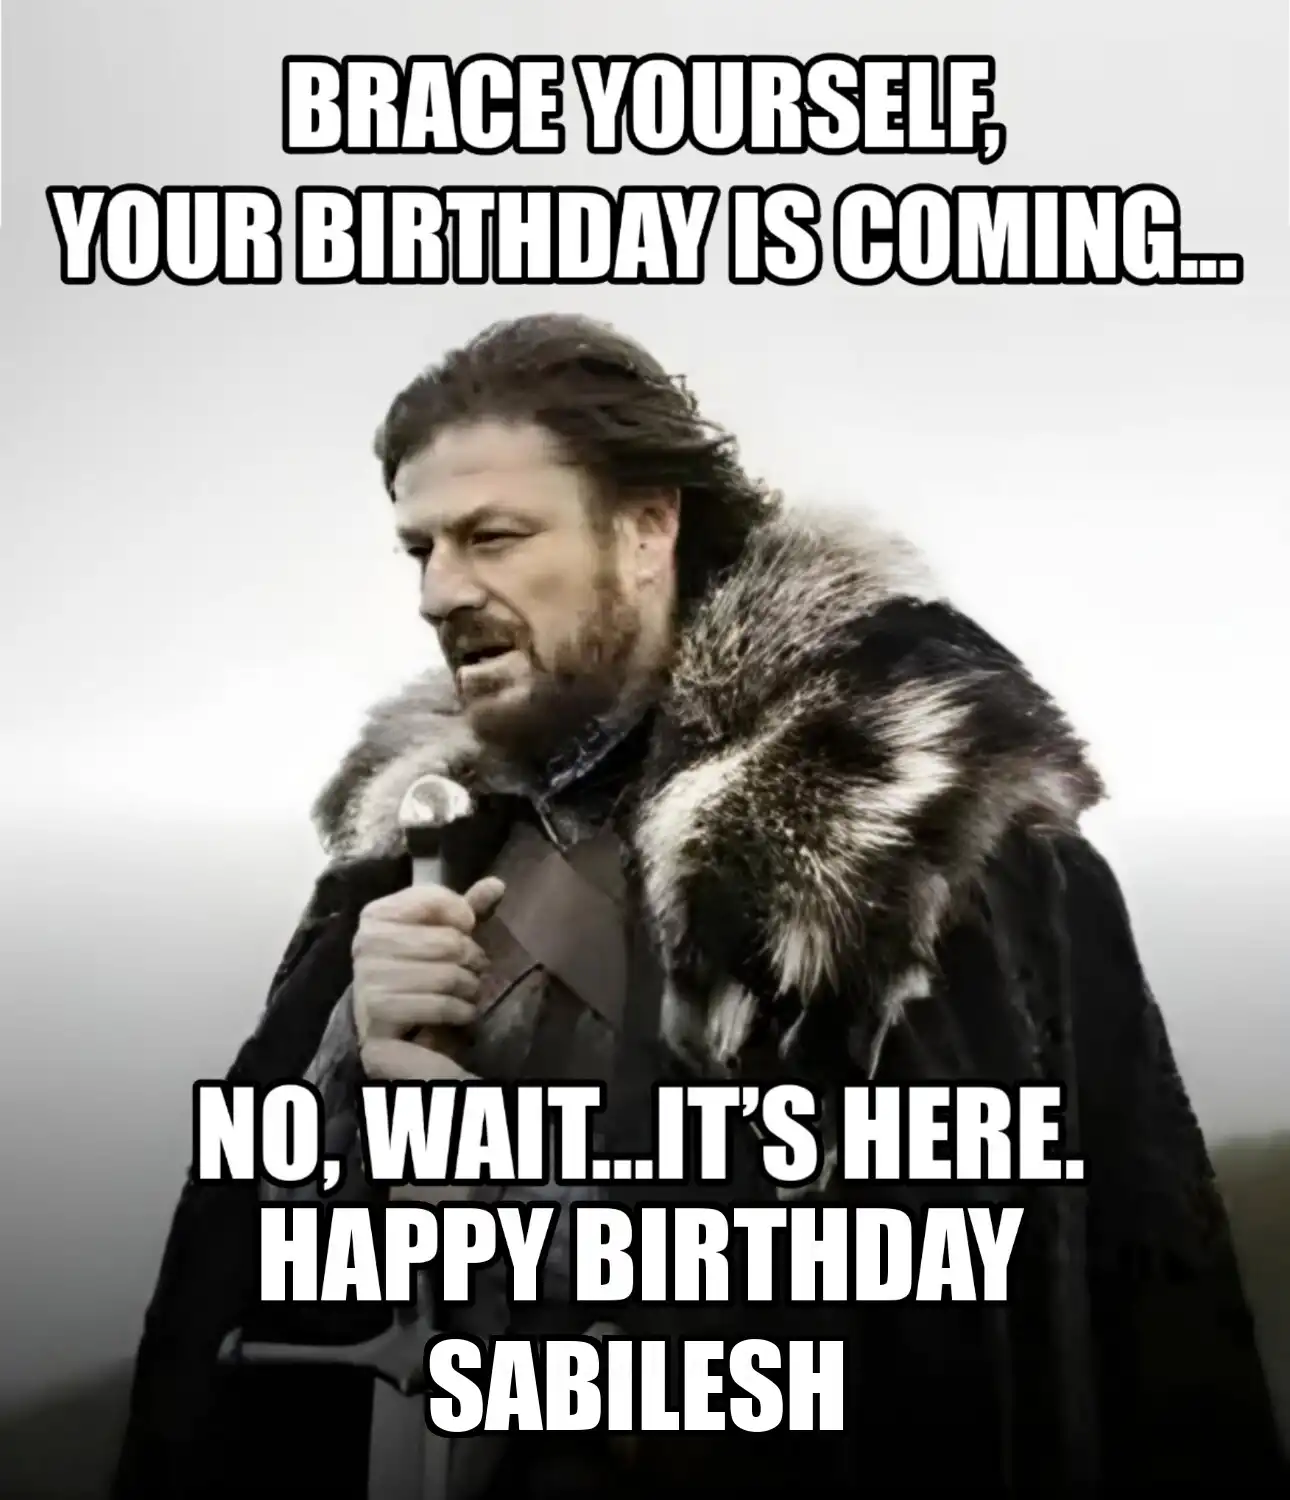 Happy Birthday Sabilesh Brace Yourself Your Birthday Is Coming Meme